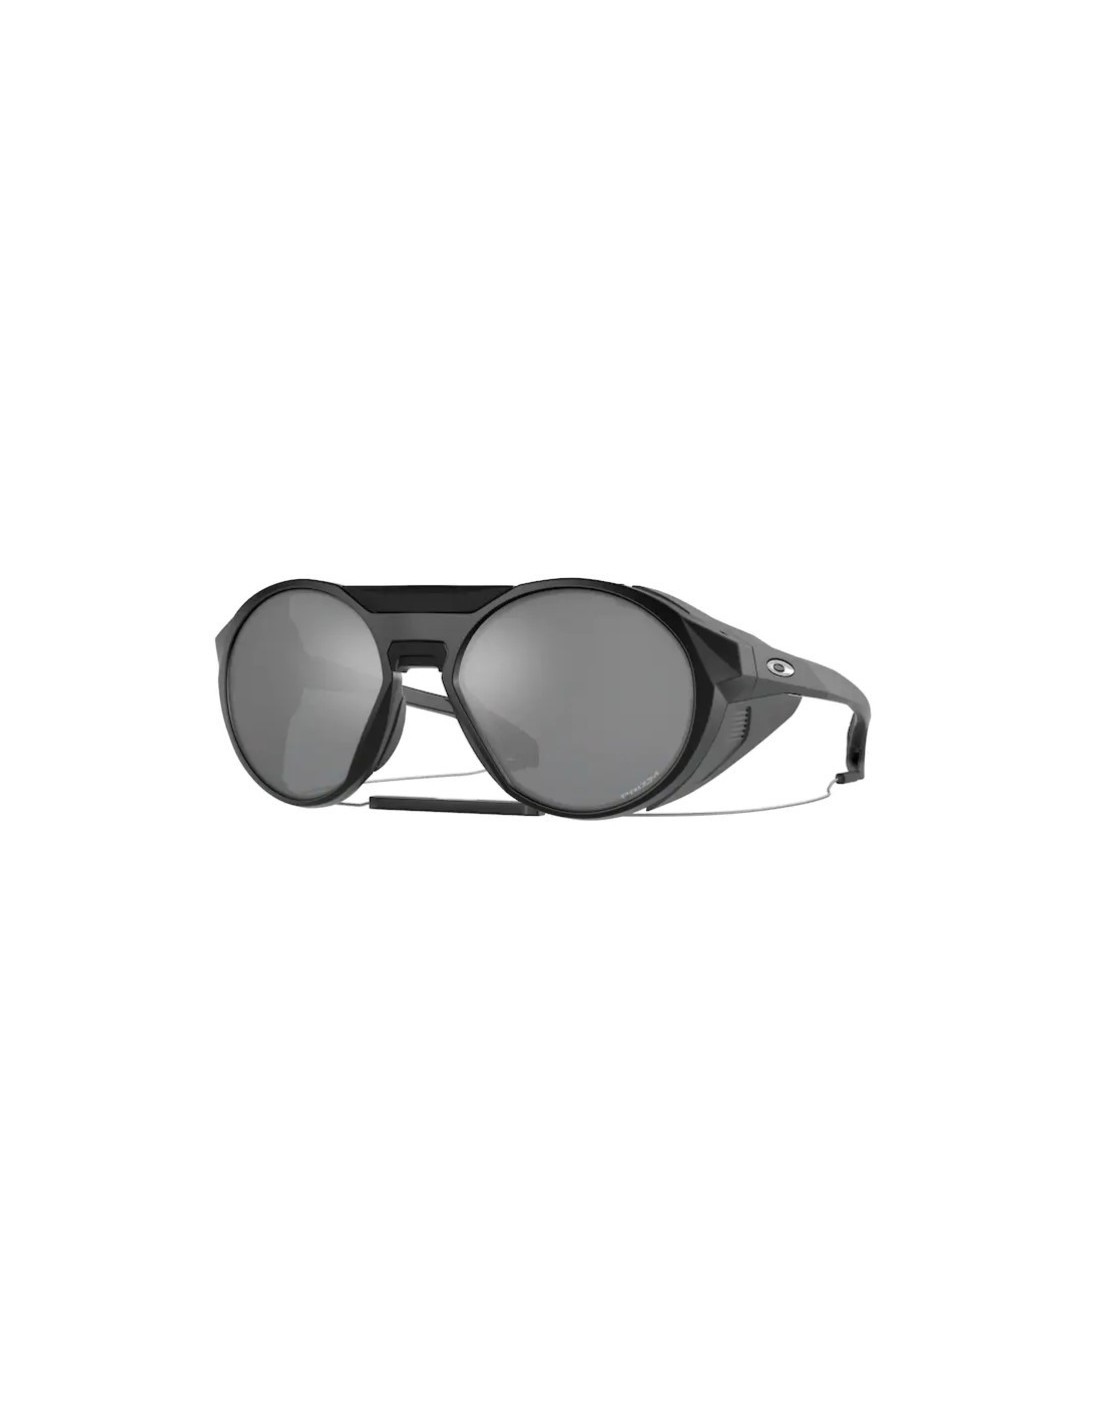 Sunglasses OAKLEY CLIFDEN 9440-06 Black Ink prizm shallow h2o polar...